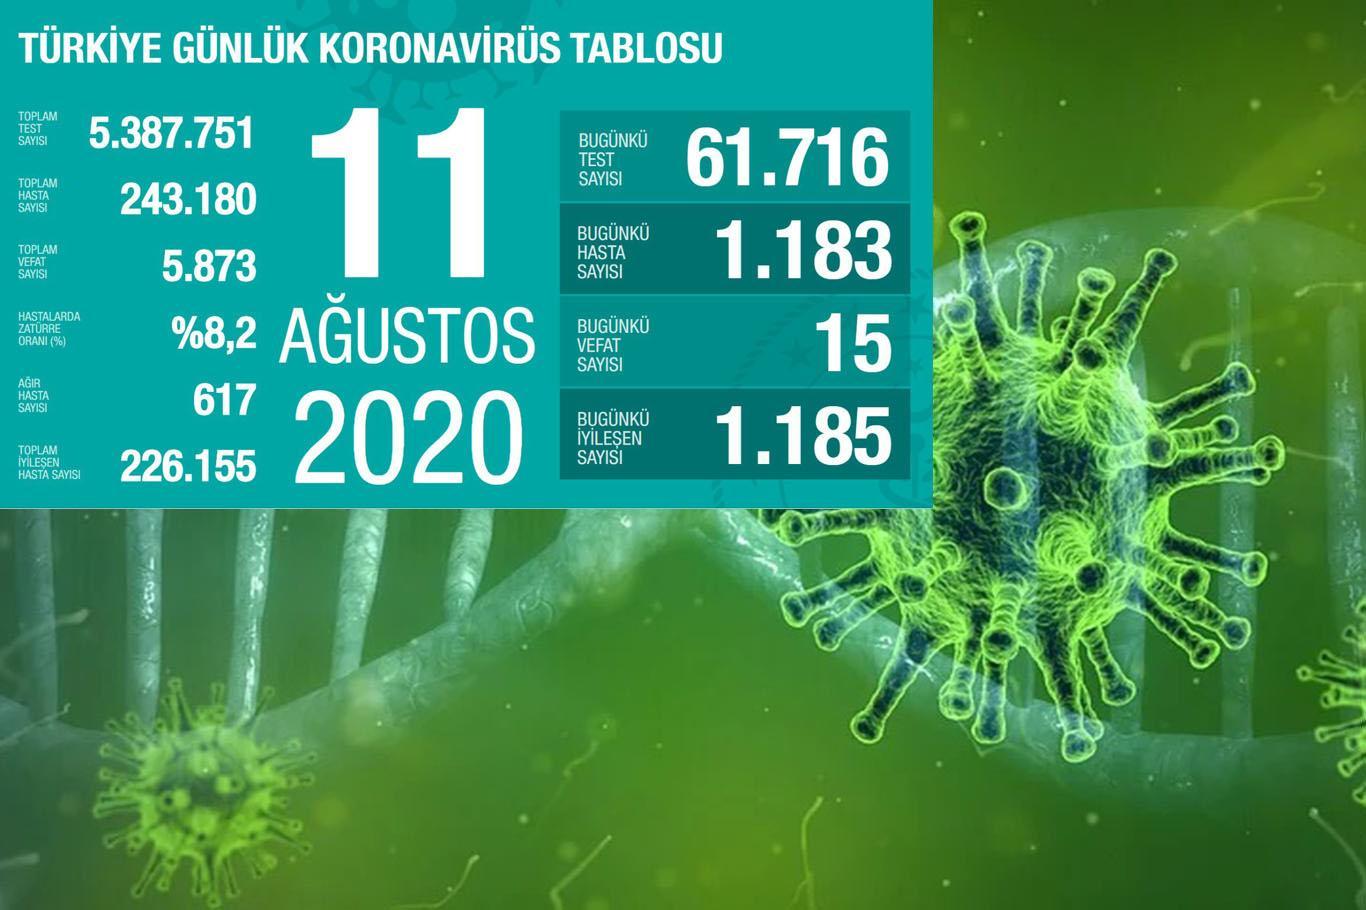 Turkey reports 15 new deaths from coronavirus